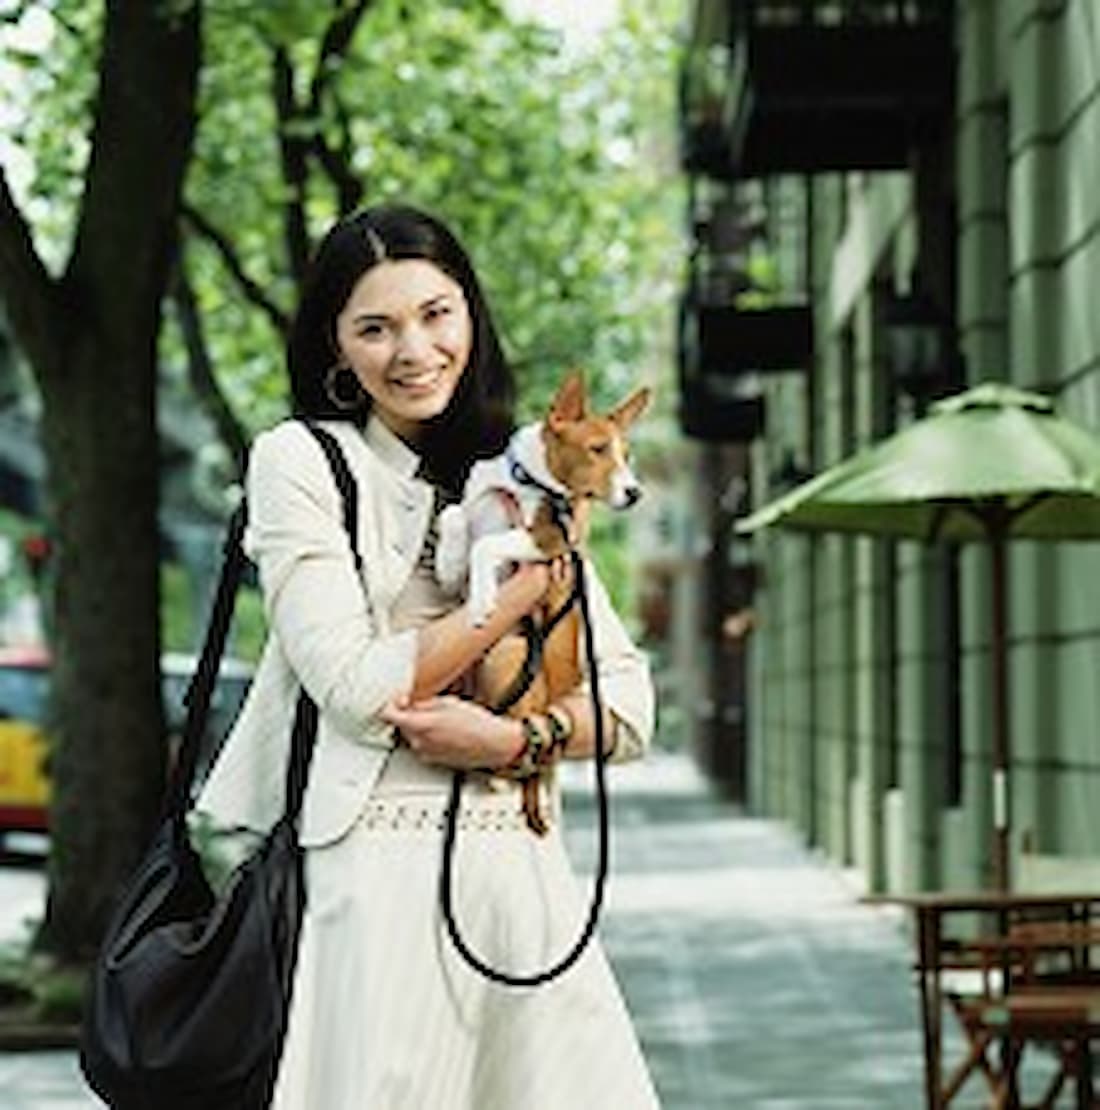 Woman carrying pet to vet